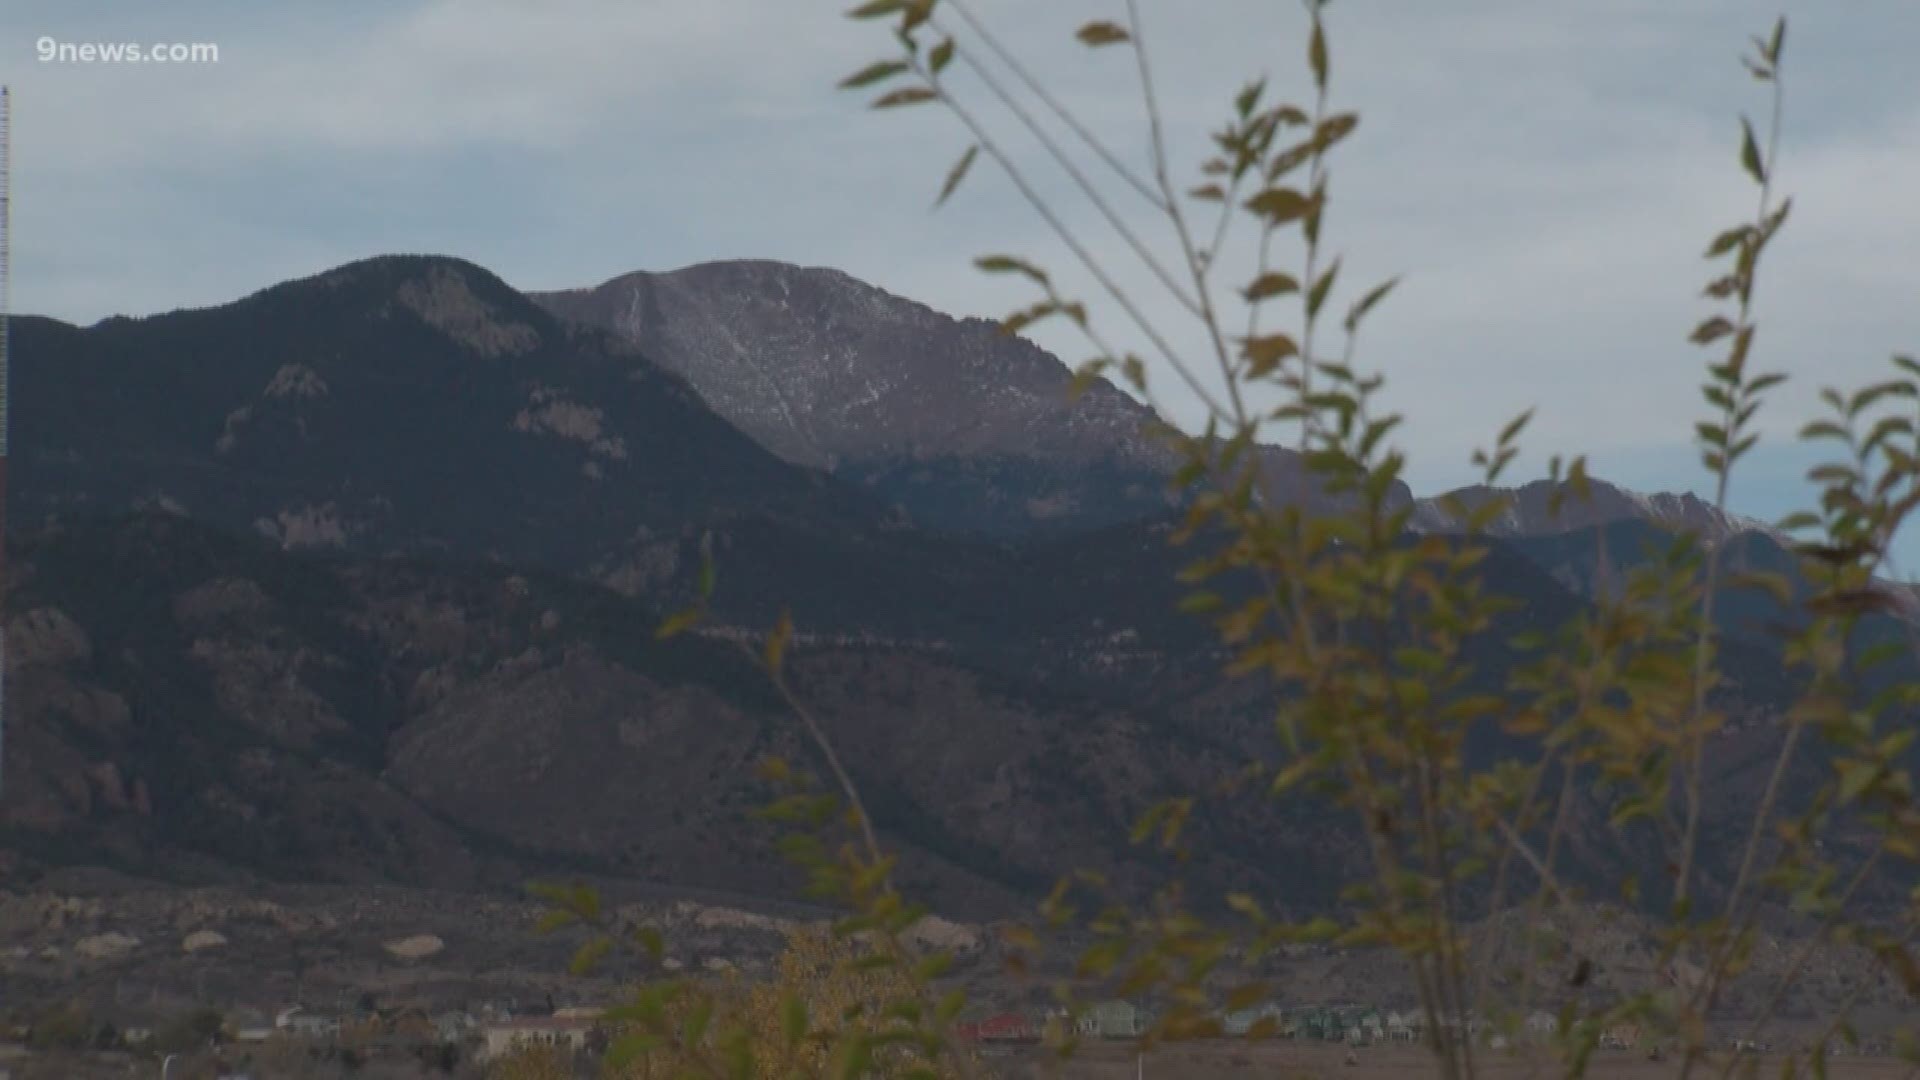 First ascent on The Diamond - Longs Peak (14,255'), Colorado on Vimeo